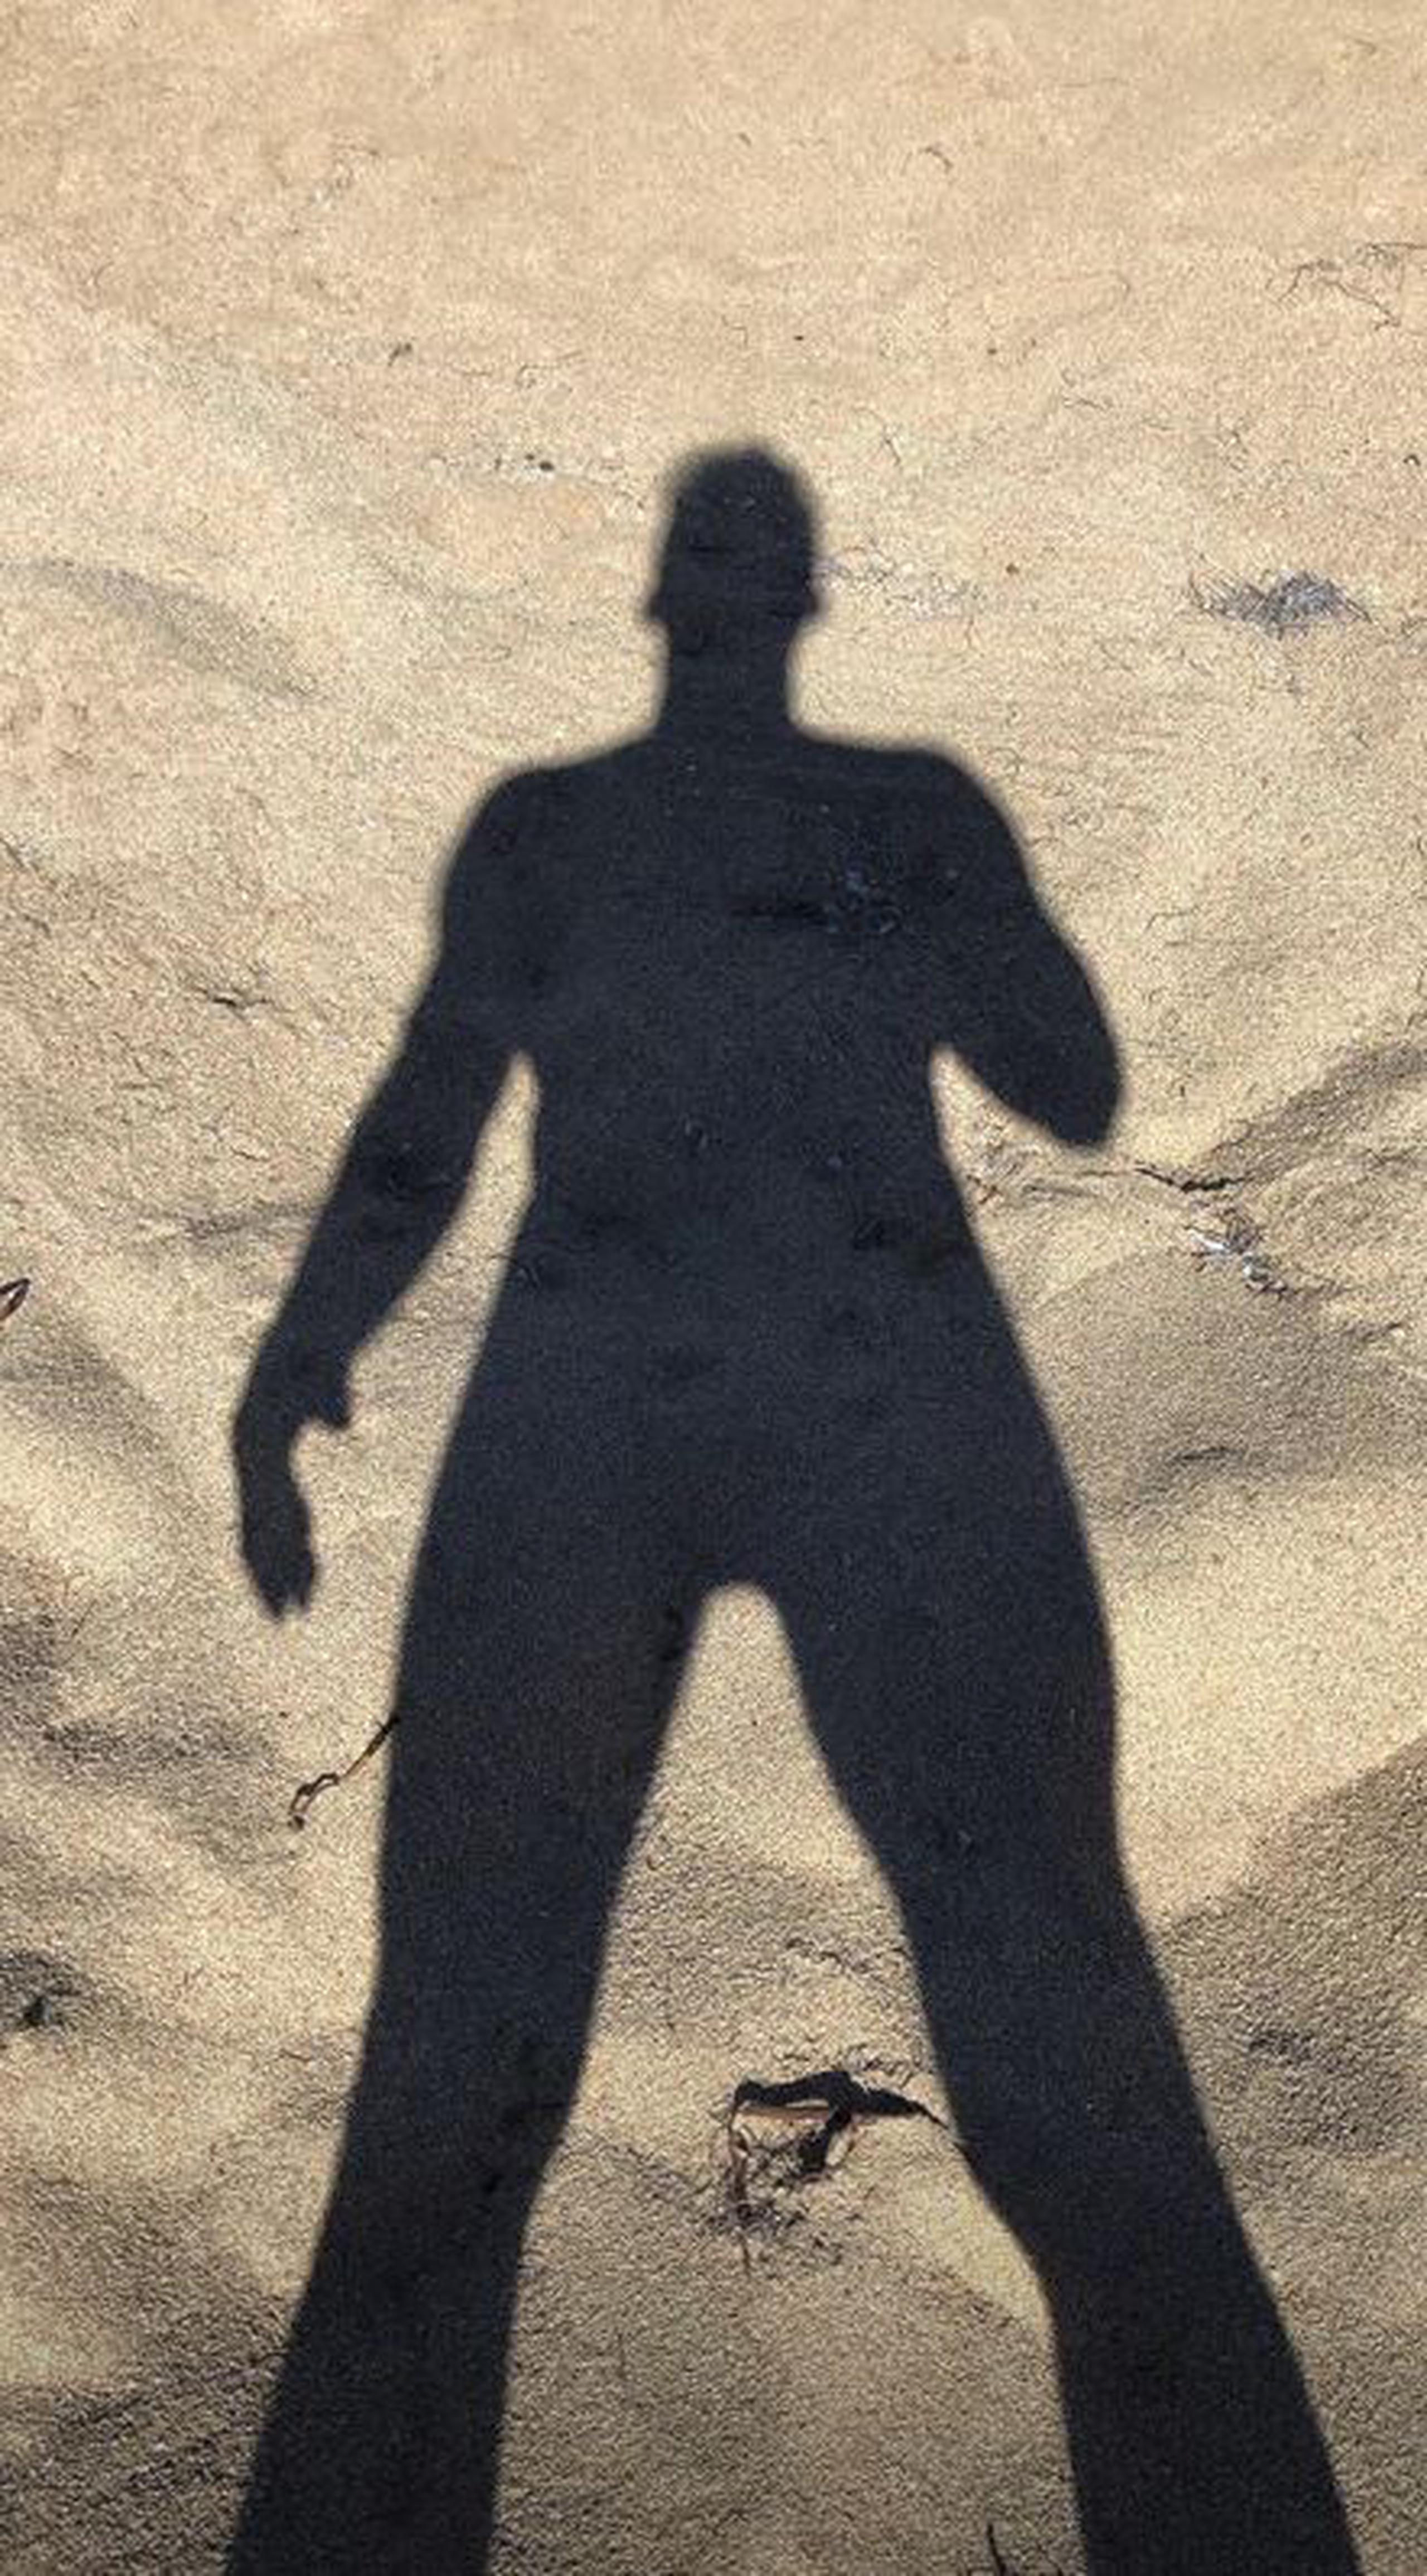 Ricky Martin y su sombra. (Instagram / @ricky_martin)